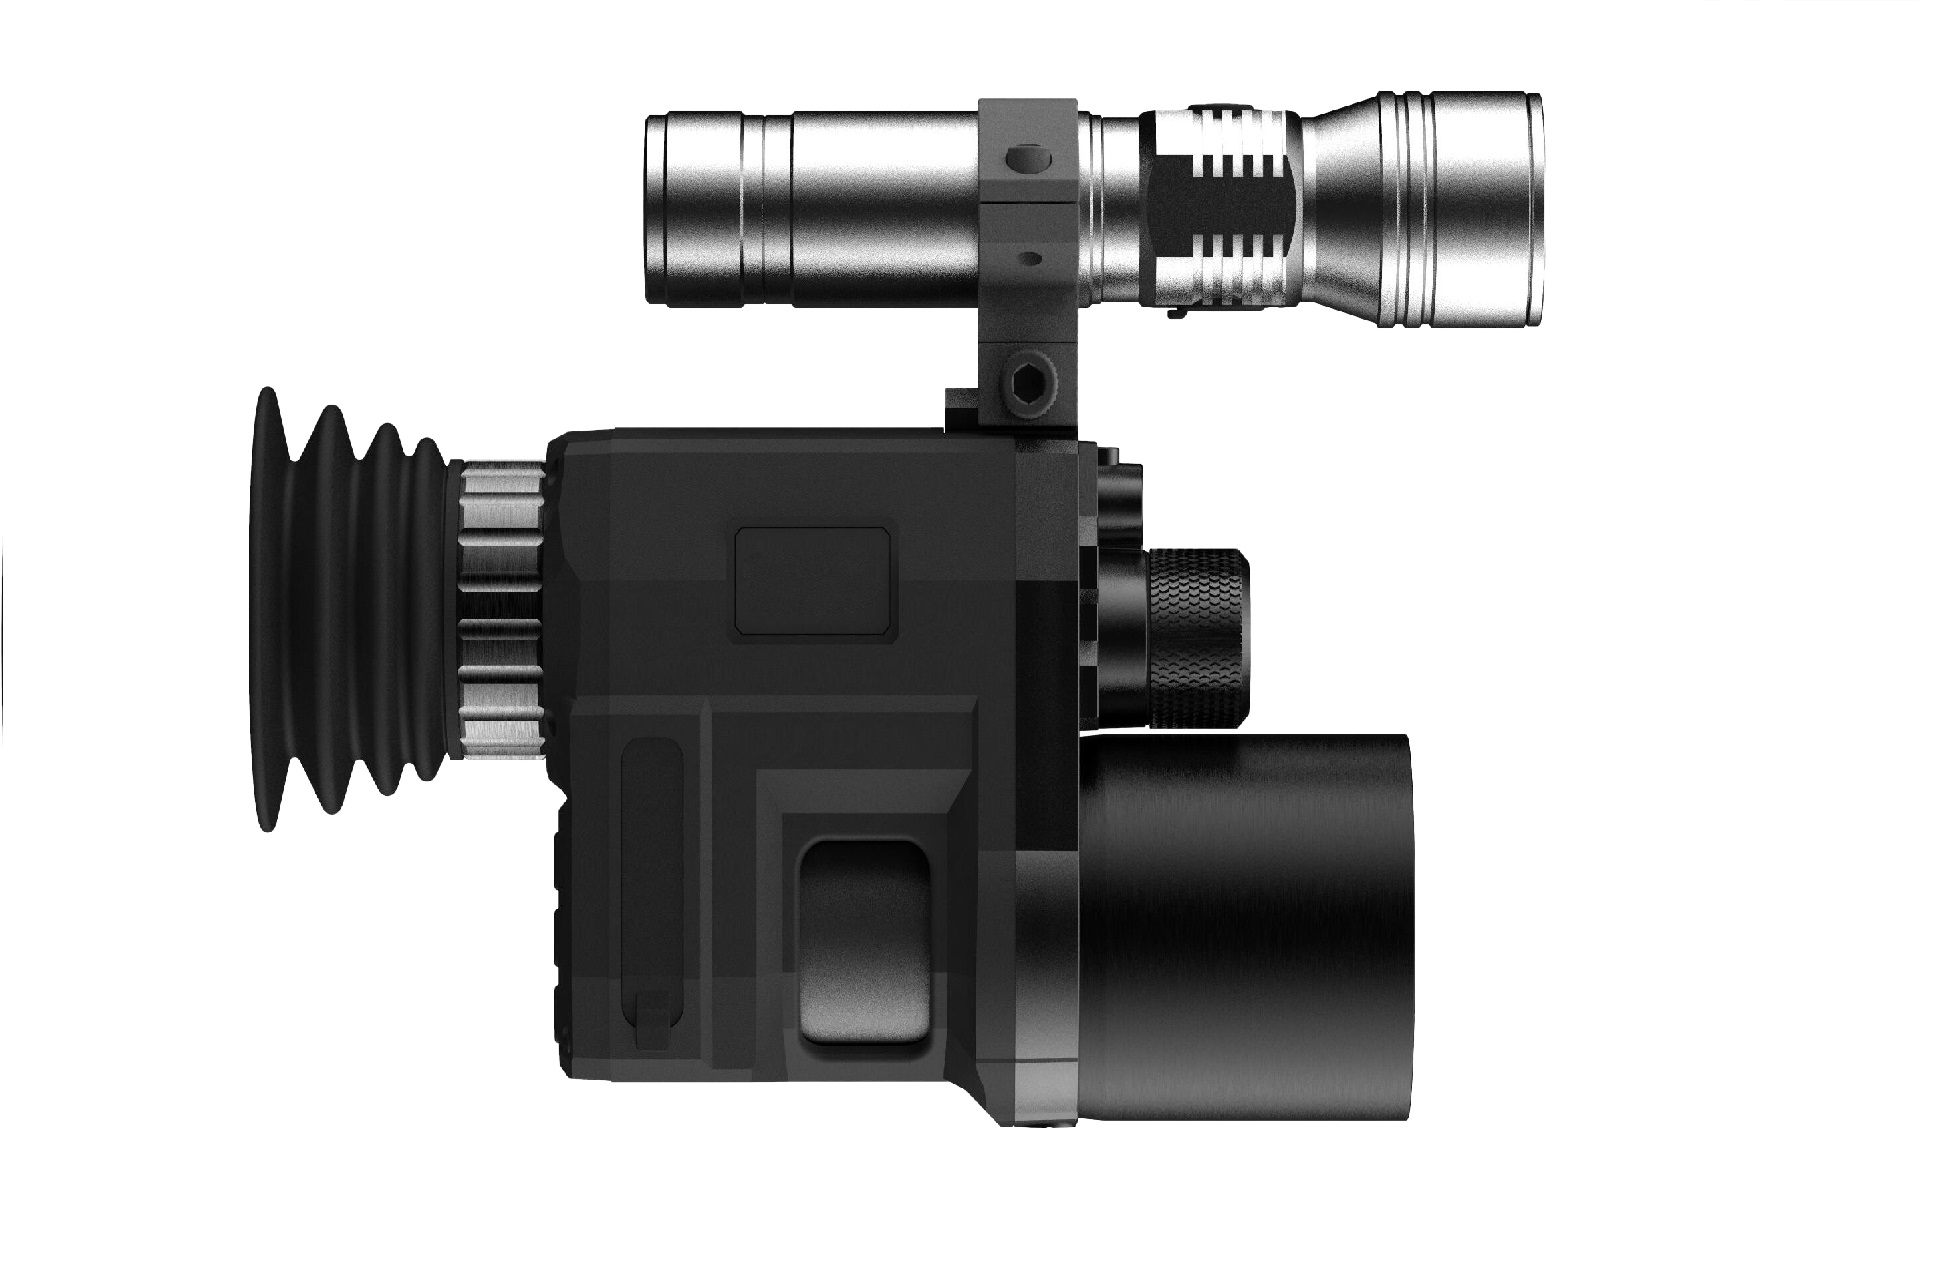 Монокуляр SUNTEK Night Vision Riflescope NV3000